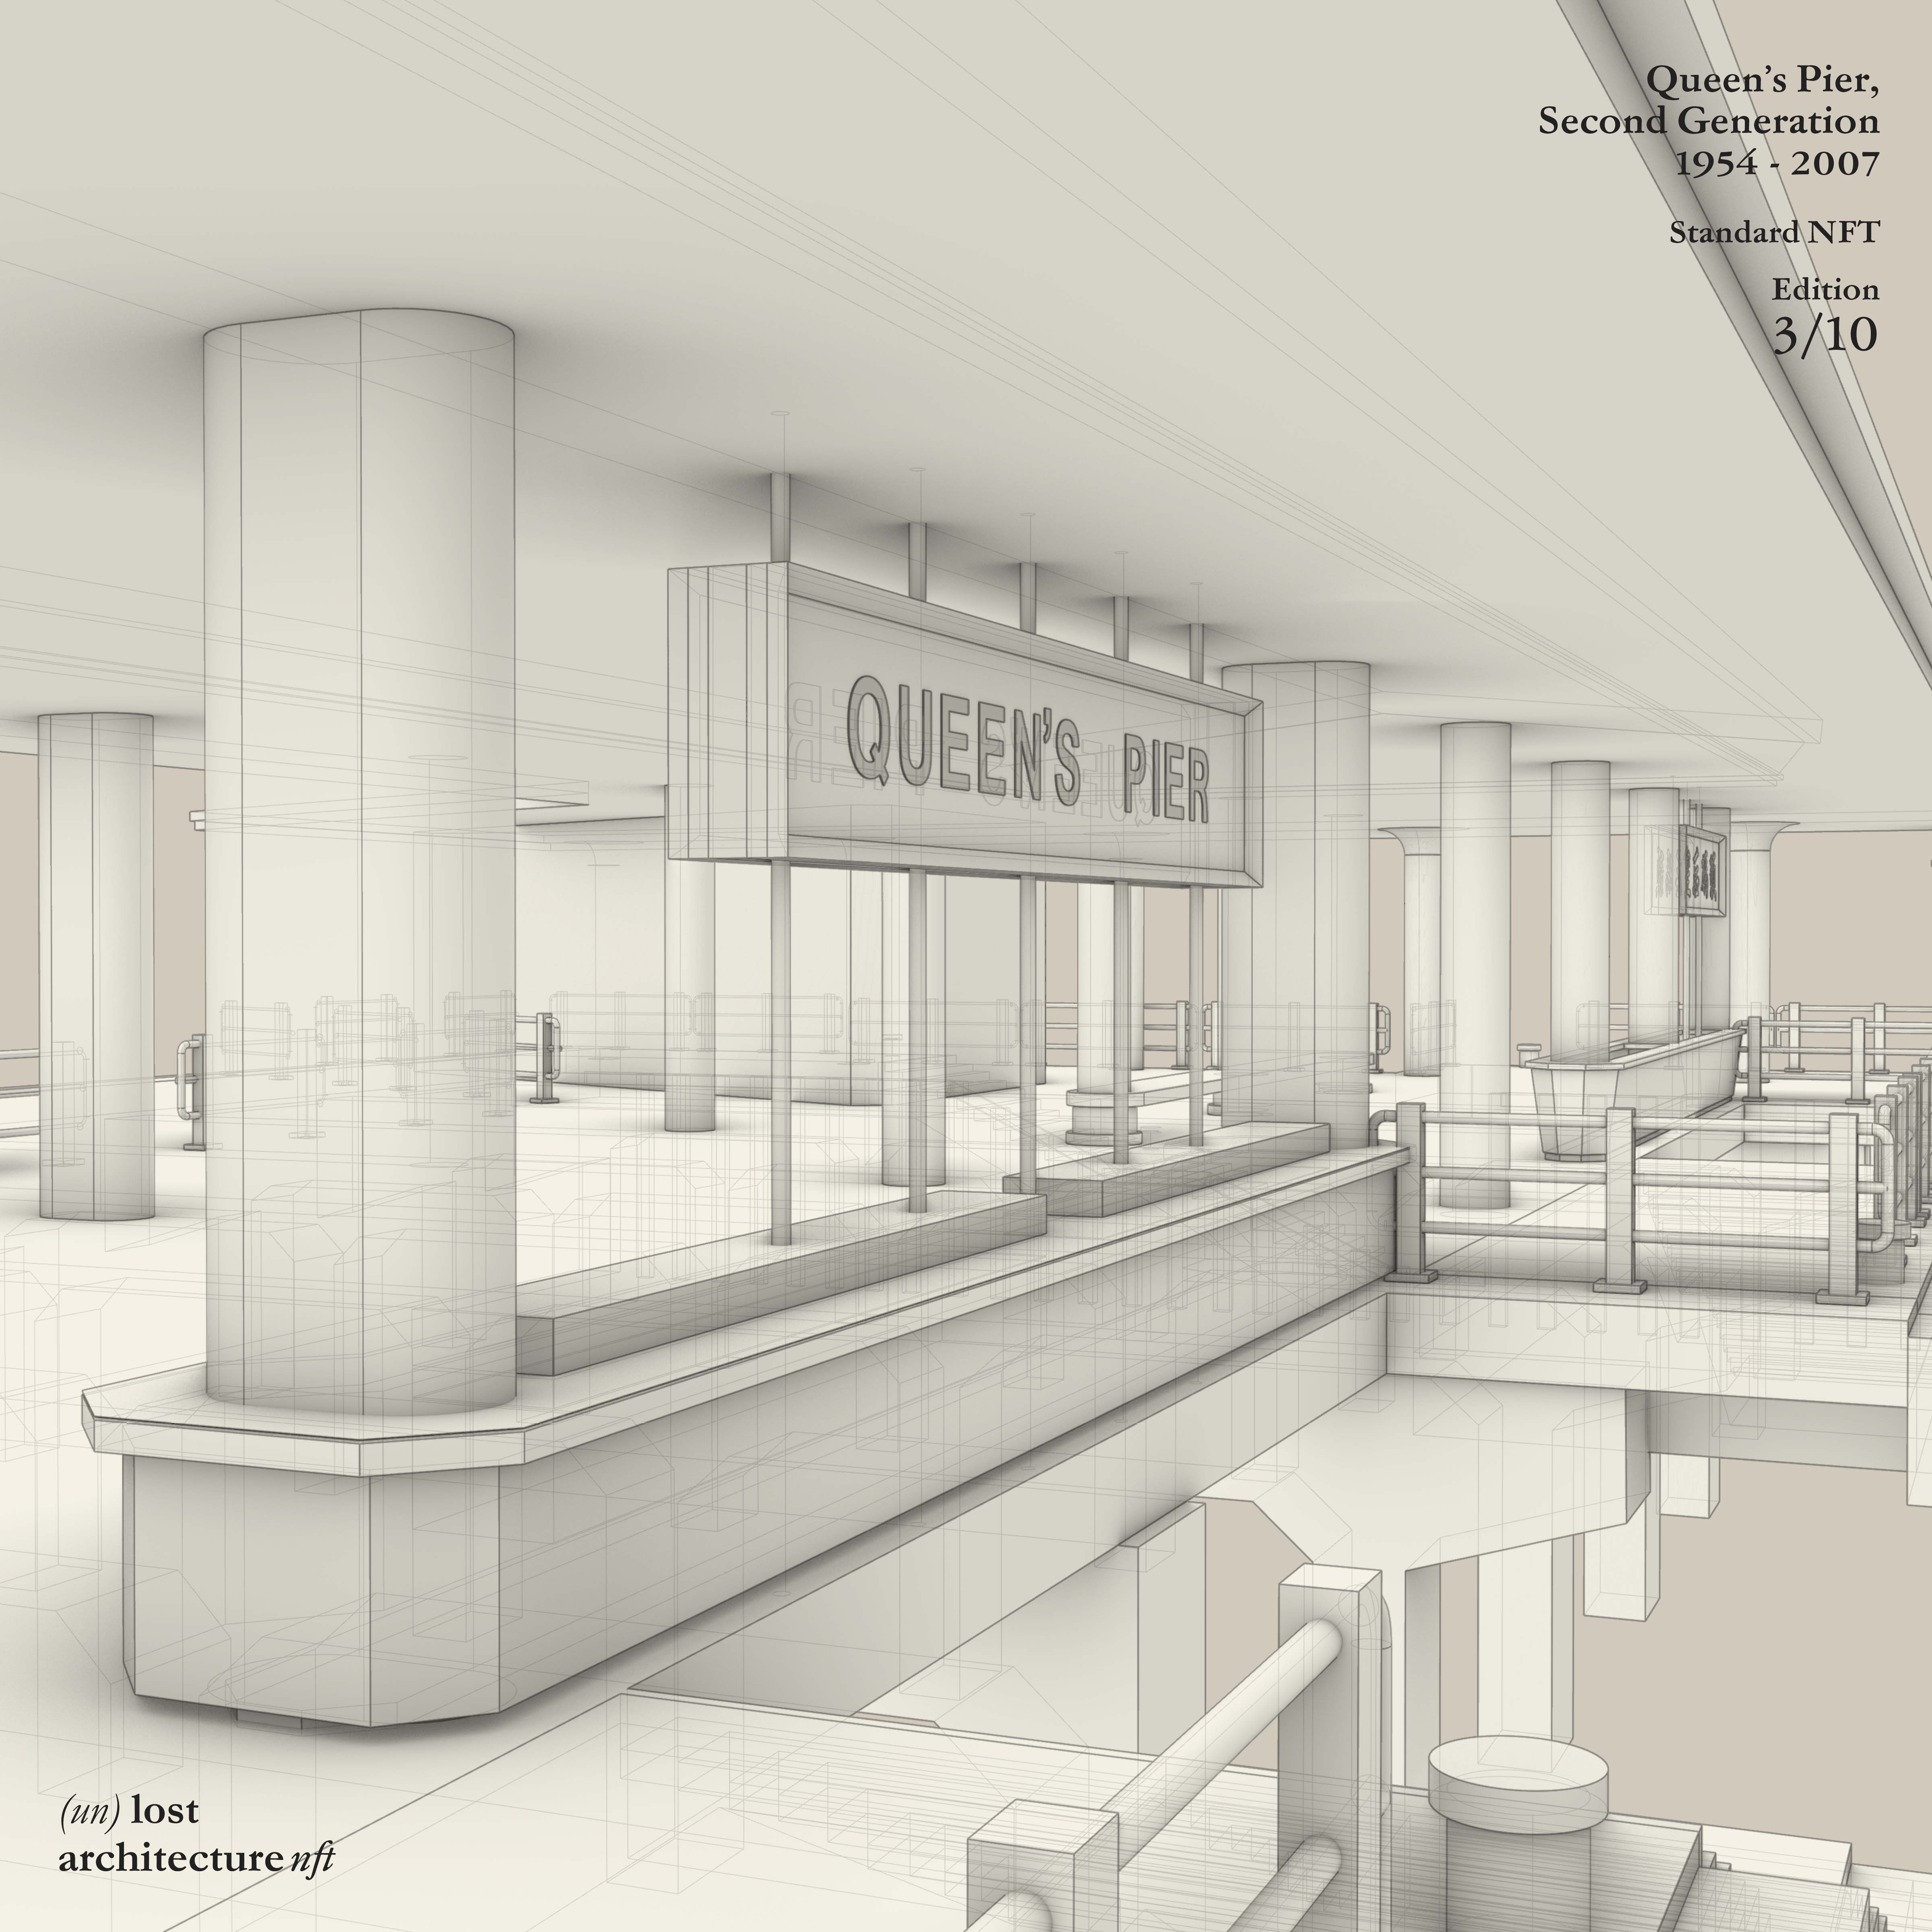 Queen’s Pier, Second Generation - Standard Version, Edition 3 of 10